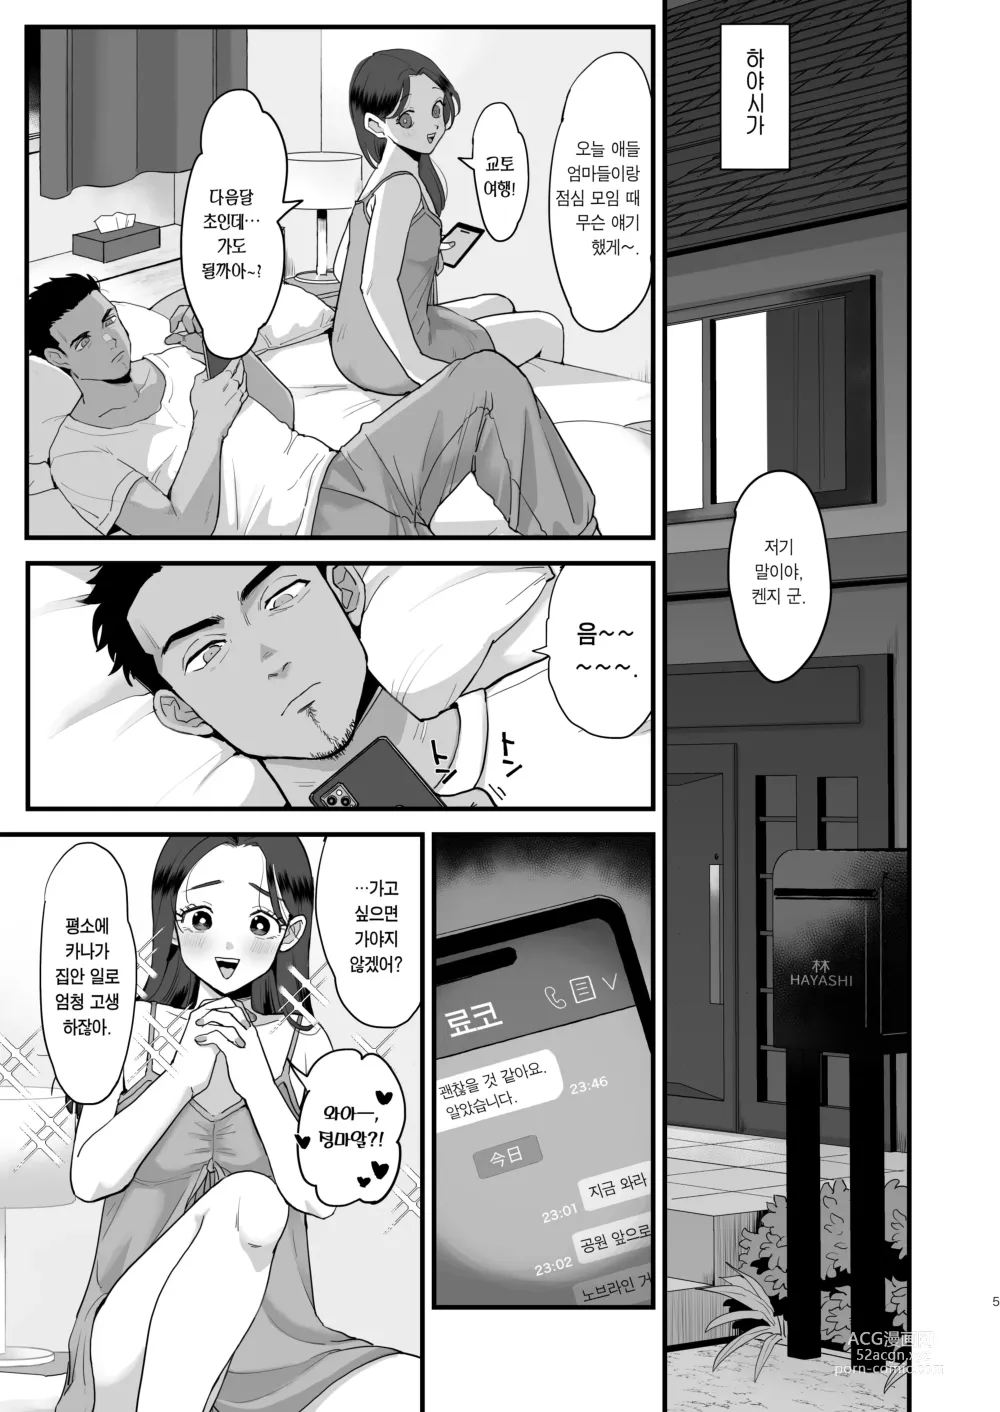 Page 4 of doujinshi 옛 동창의 섹프 격한 걸 좋아하는 료코 씨.